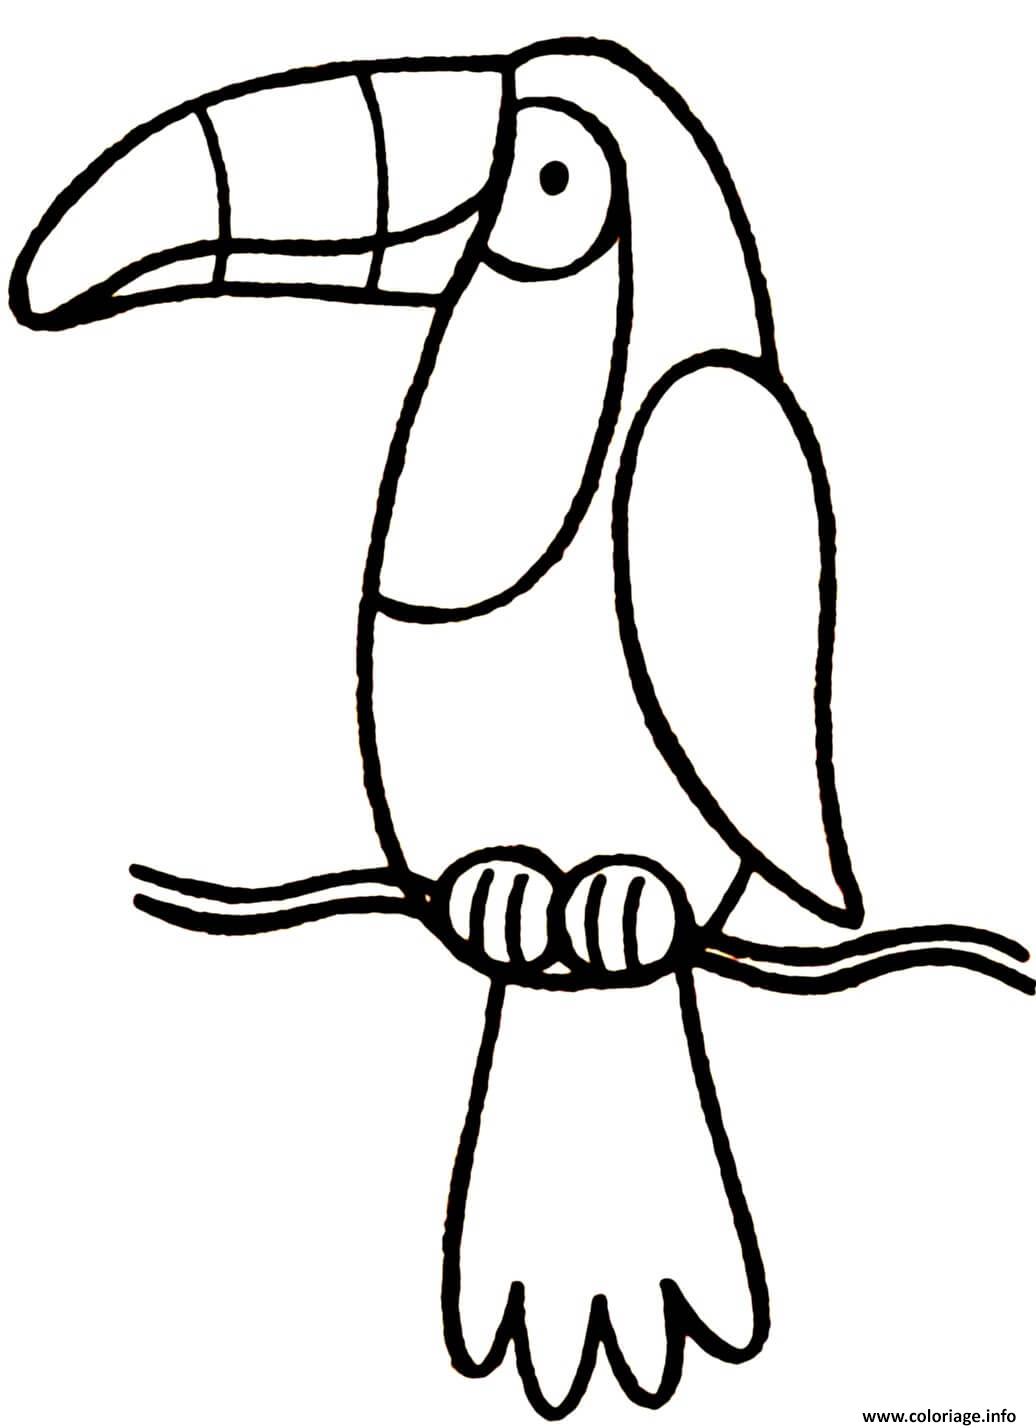 Coloriage Oiseau Toucan Simple Dessin à Imprimer